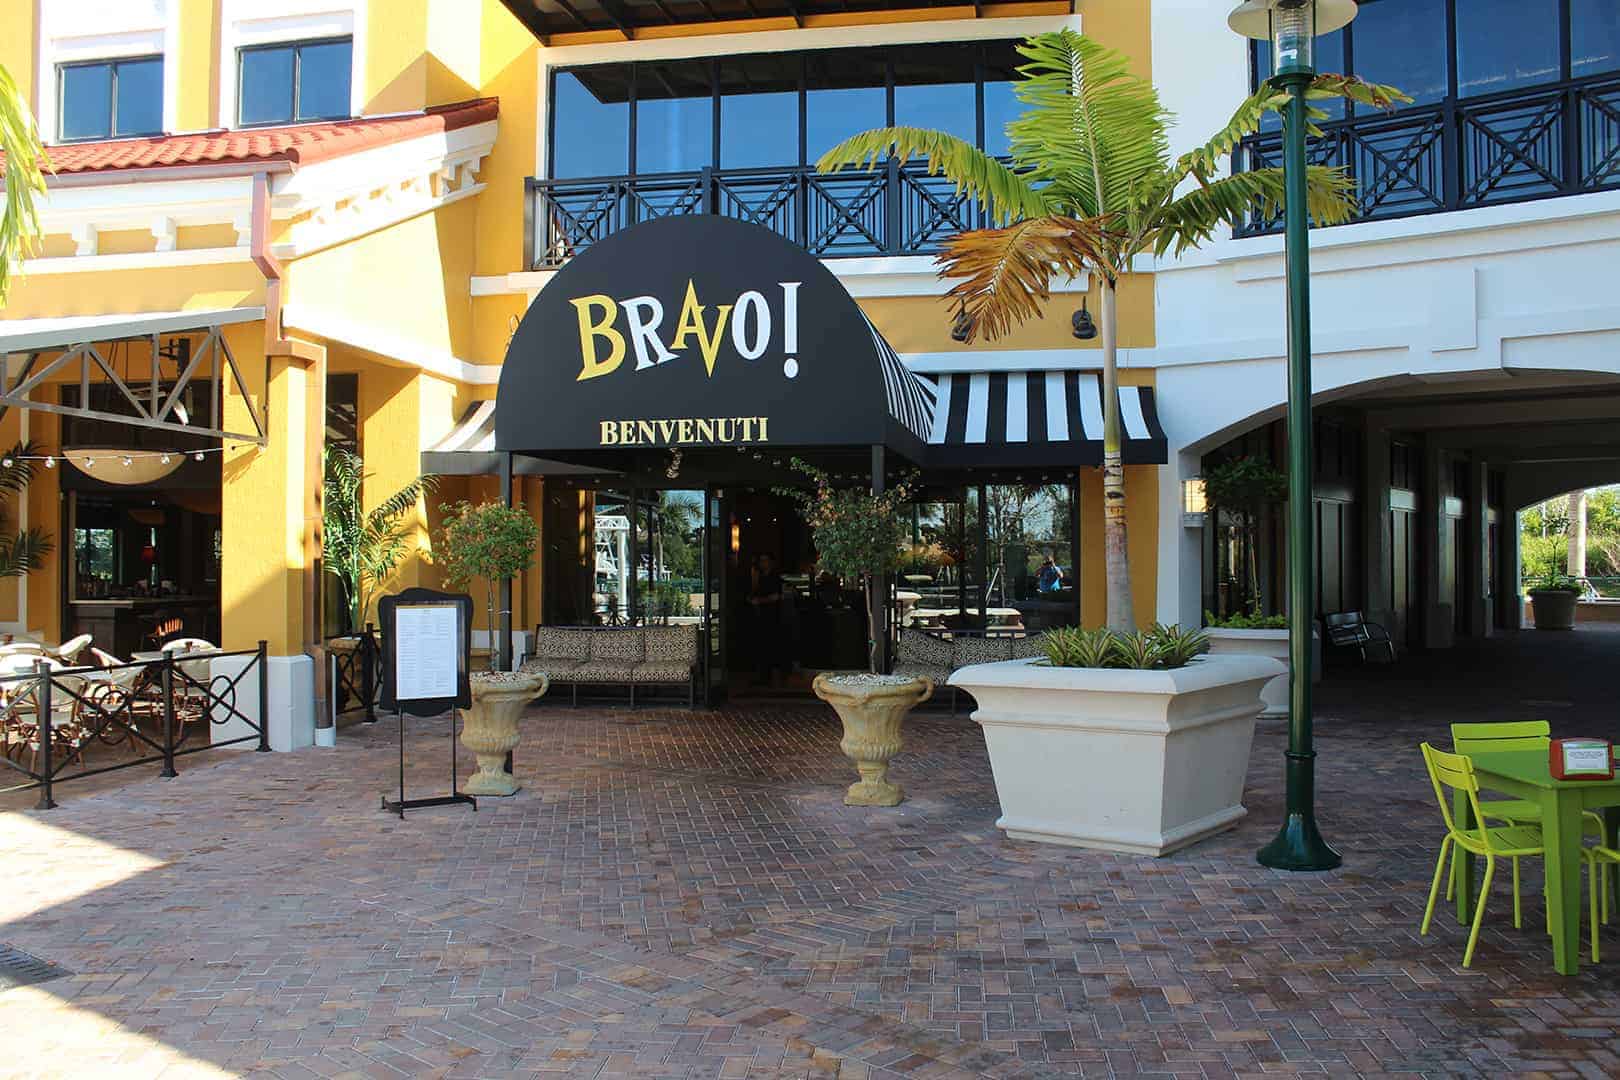 Bravo! restaurant with SMI 090 Storefront System from Aldora